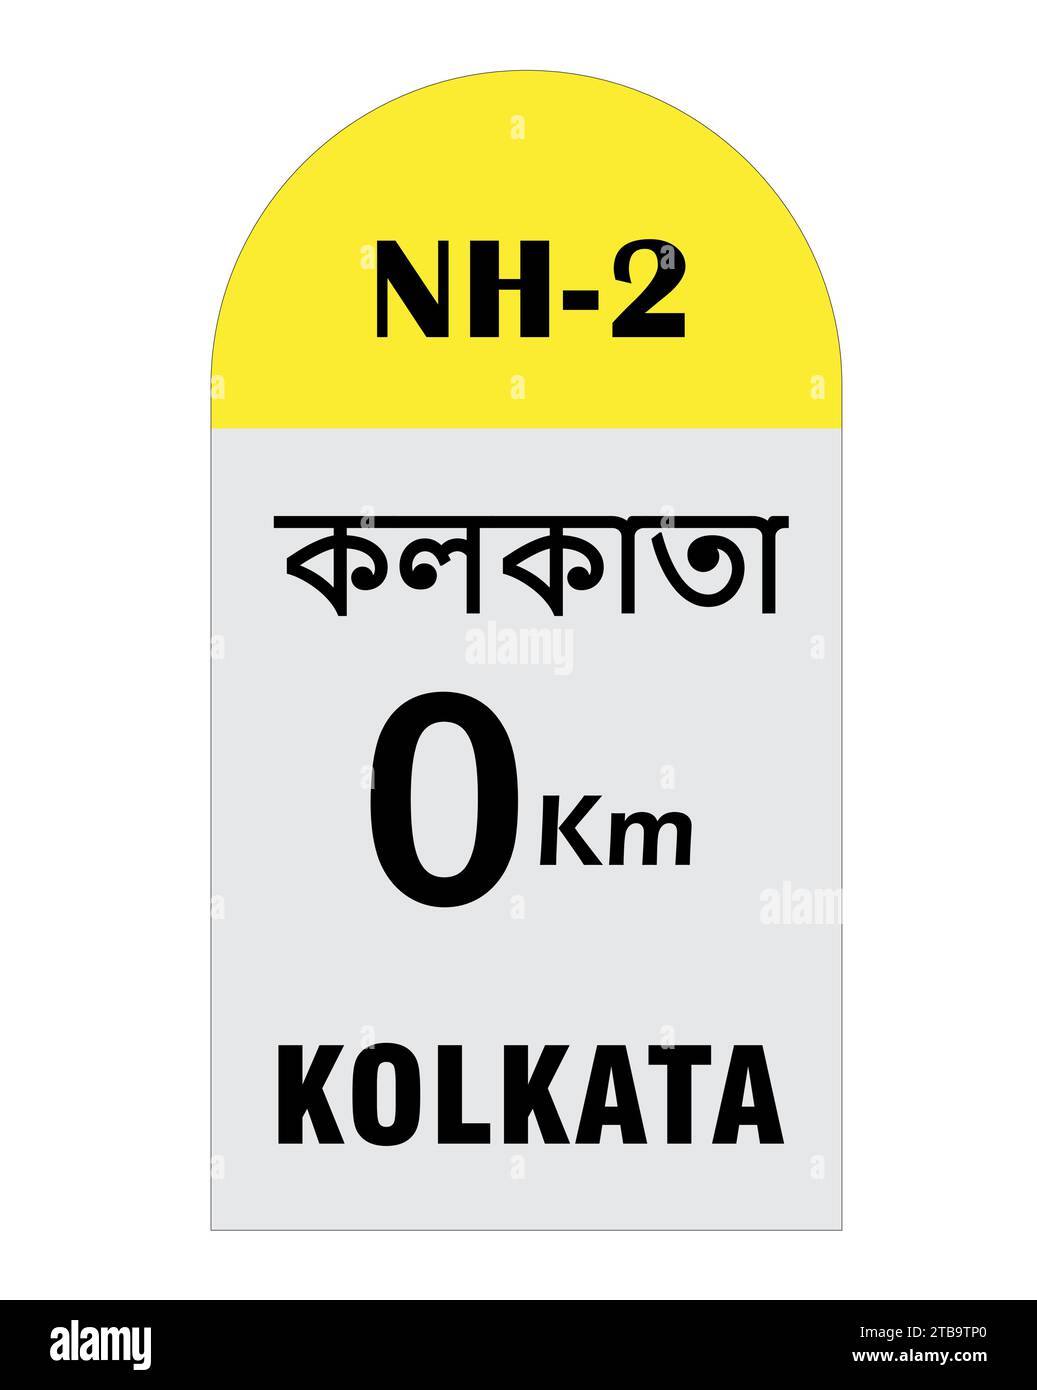 Kolkata 0 km Milestone vector illustration Stock Vector